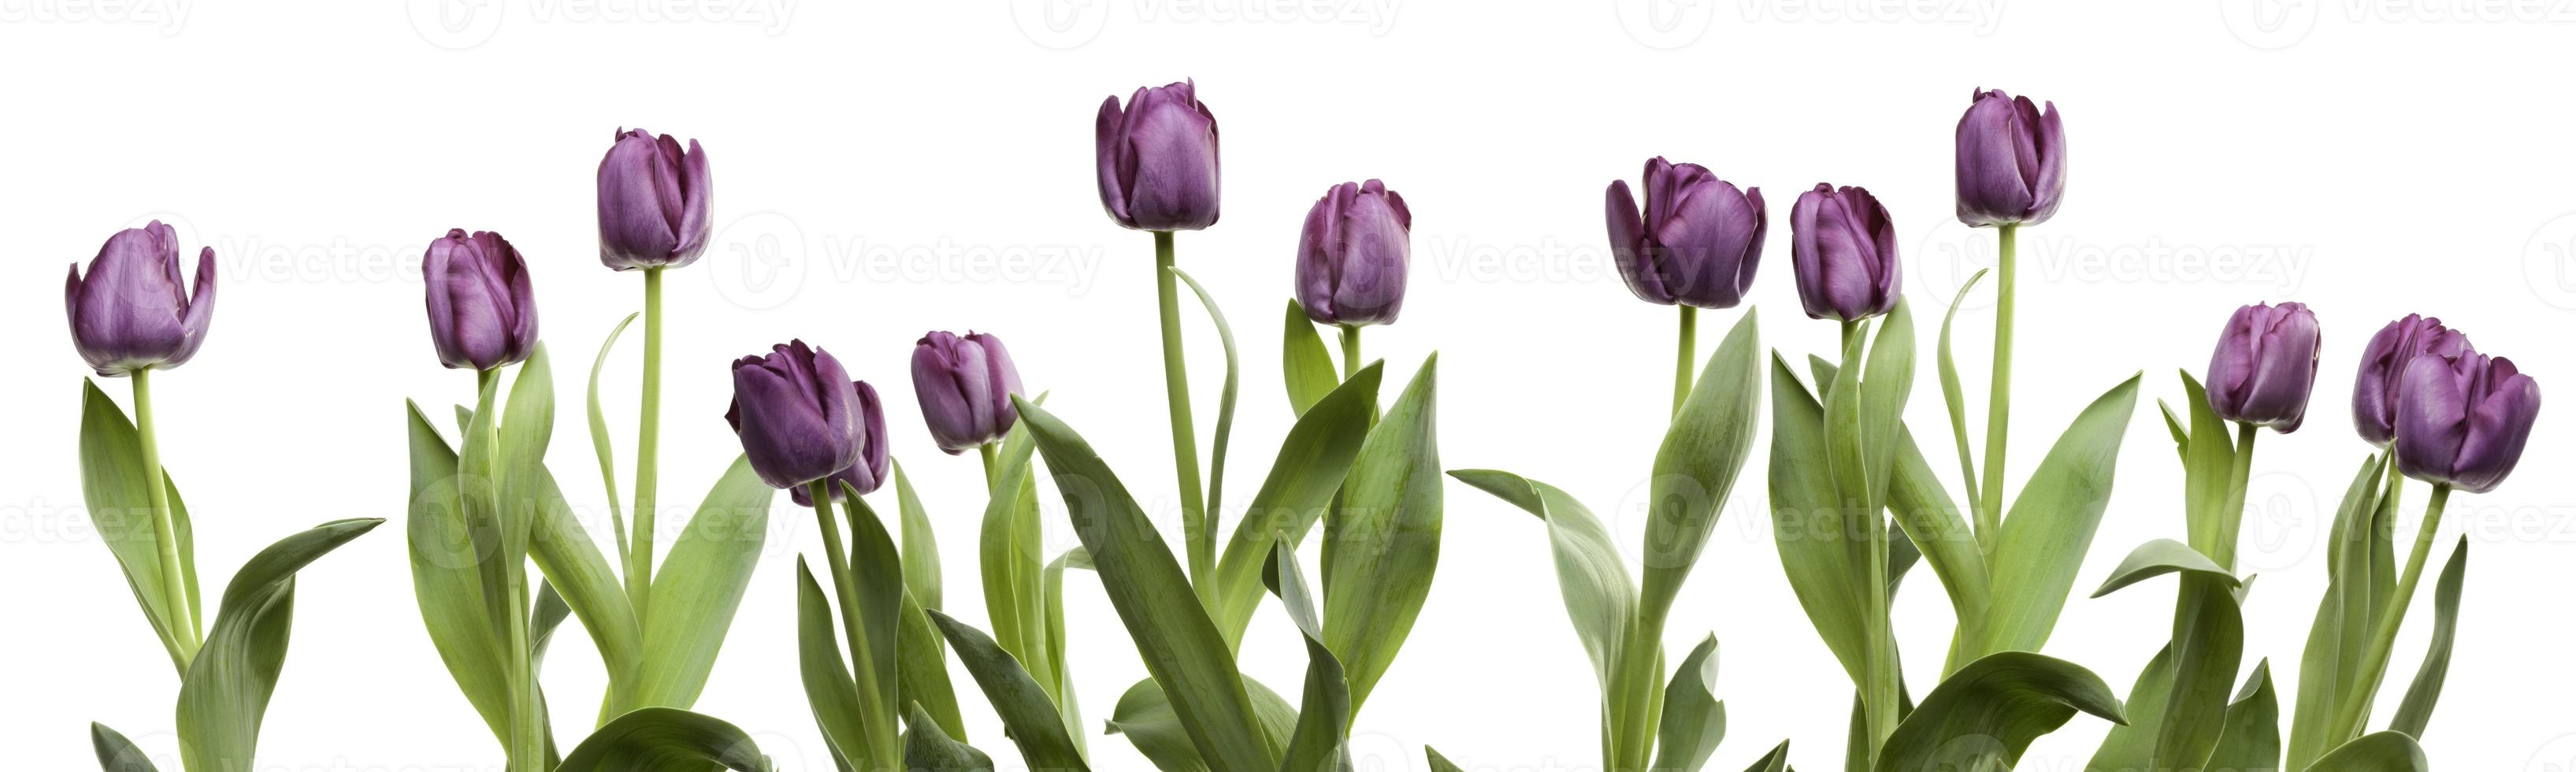 fila de tulipanes morados foto